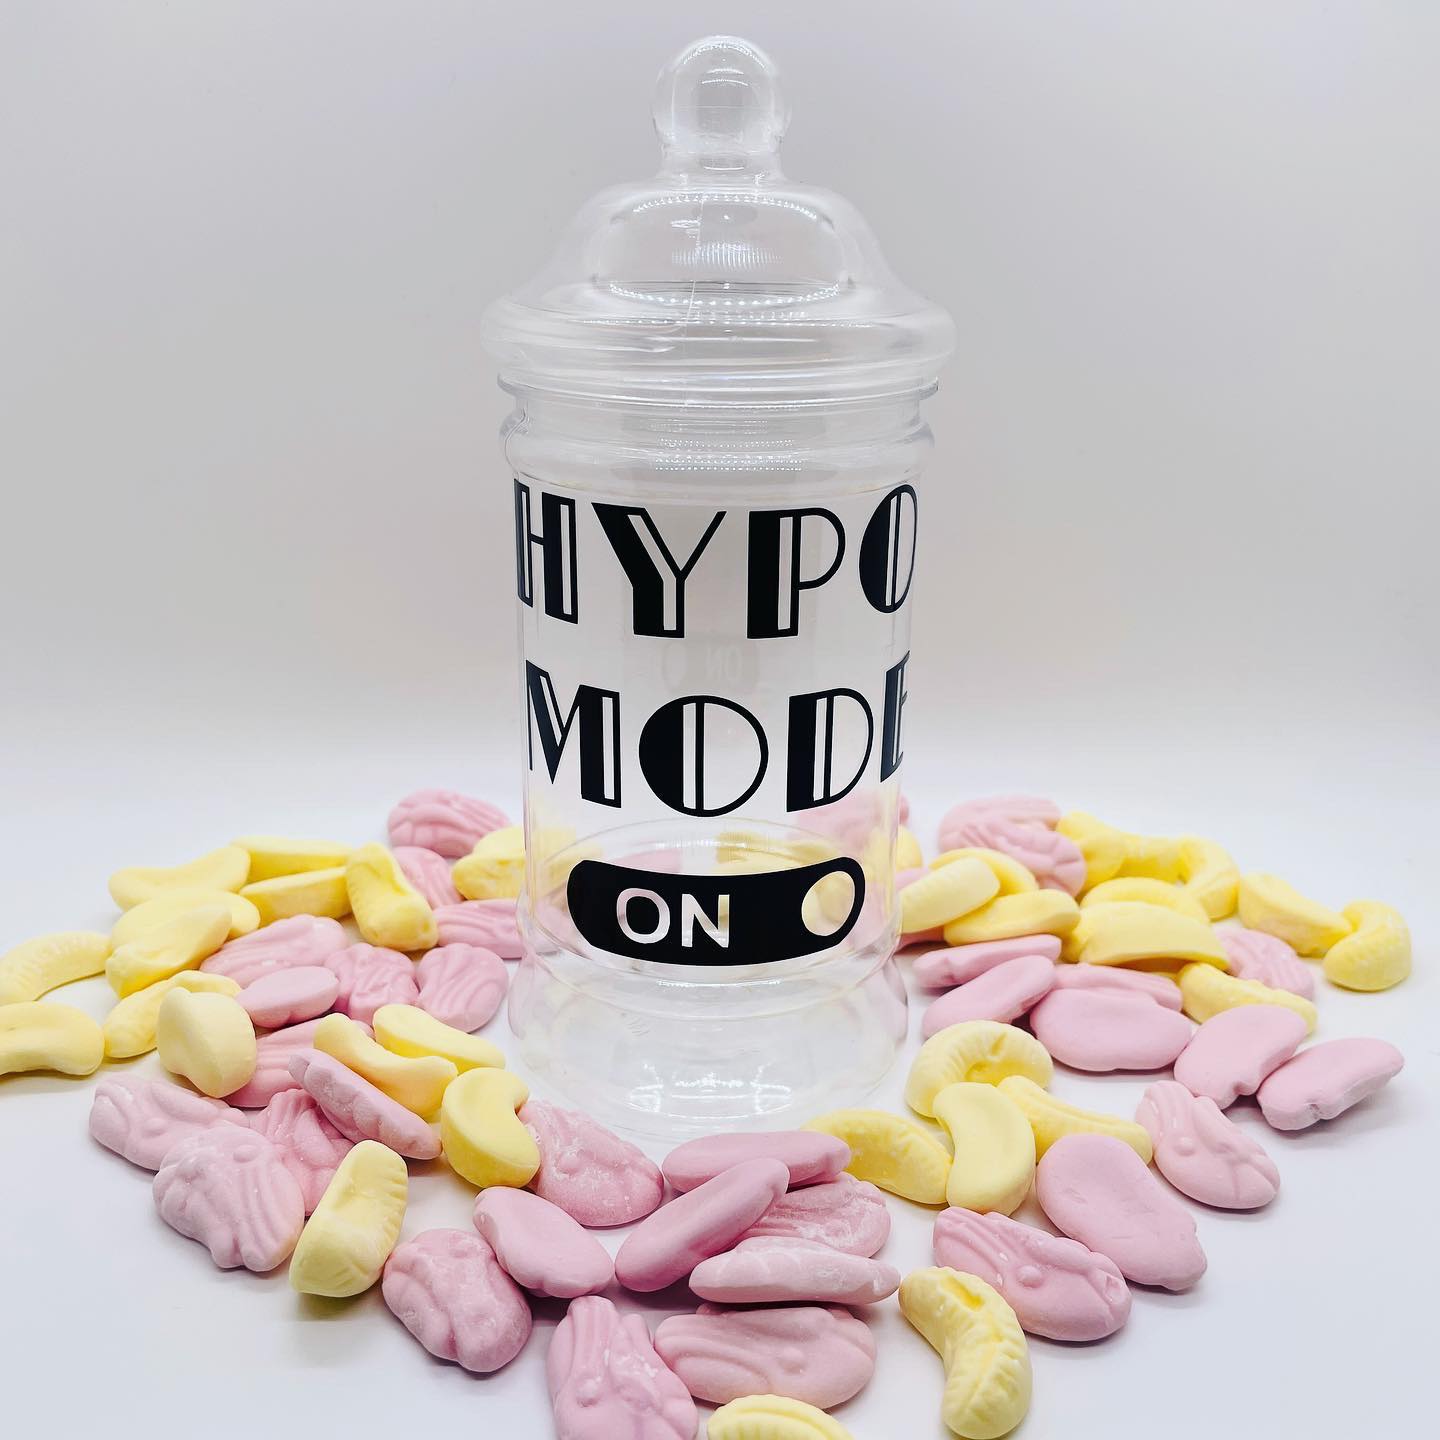 Hypo-Treat Sweet Jars - Hypo Mode - On.